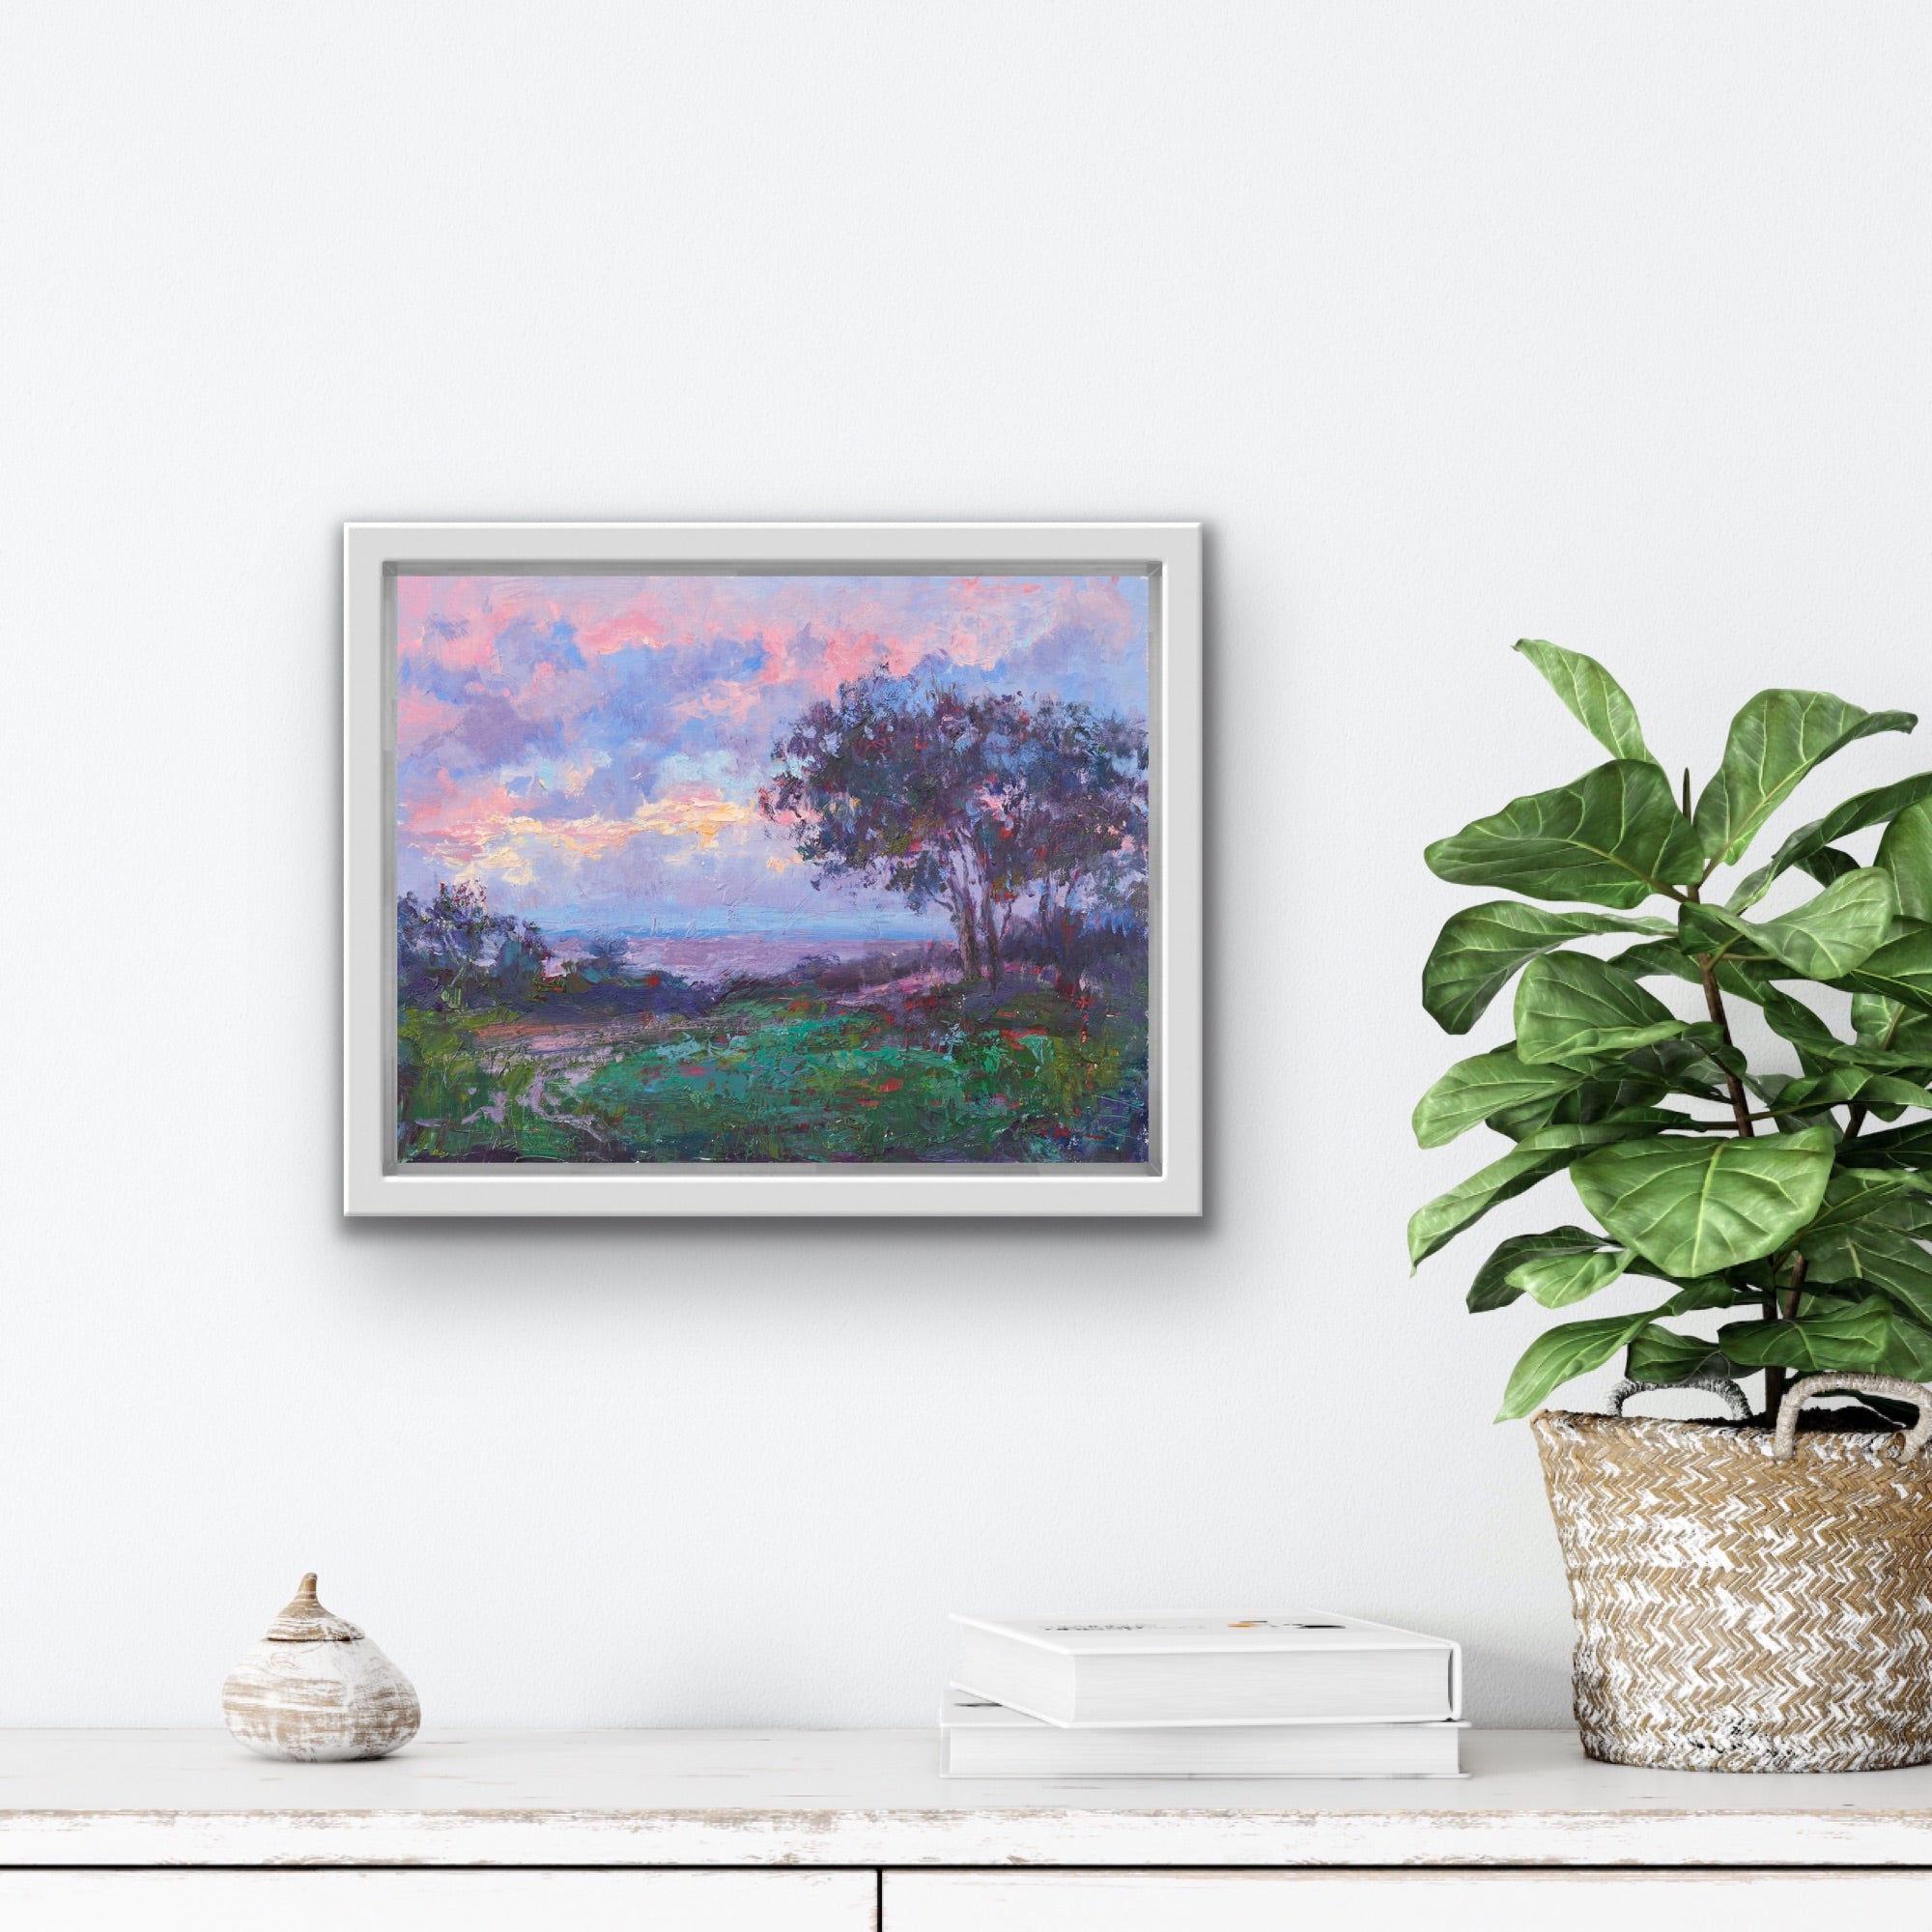 Oksana-Johnson-original-oil-painting-Pink-Sunset-before-the-Rain-Pointe-du-Hoc-Normandy-France-Trees-Hill-Ocean-Sunset-11x14-inches